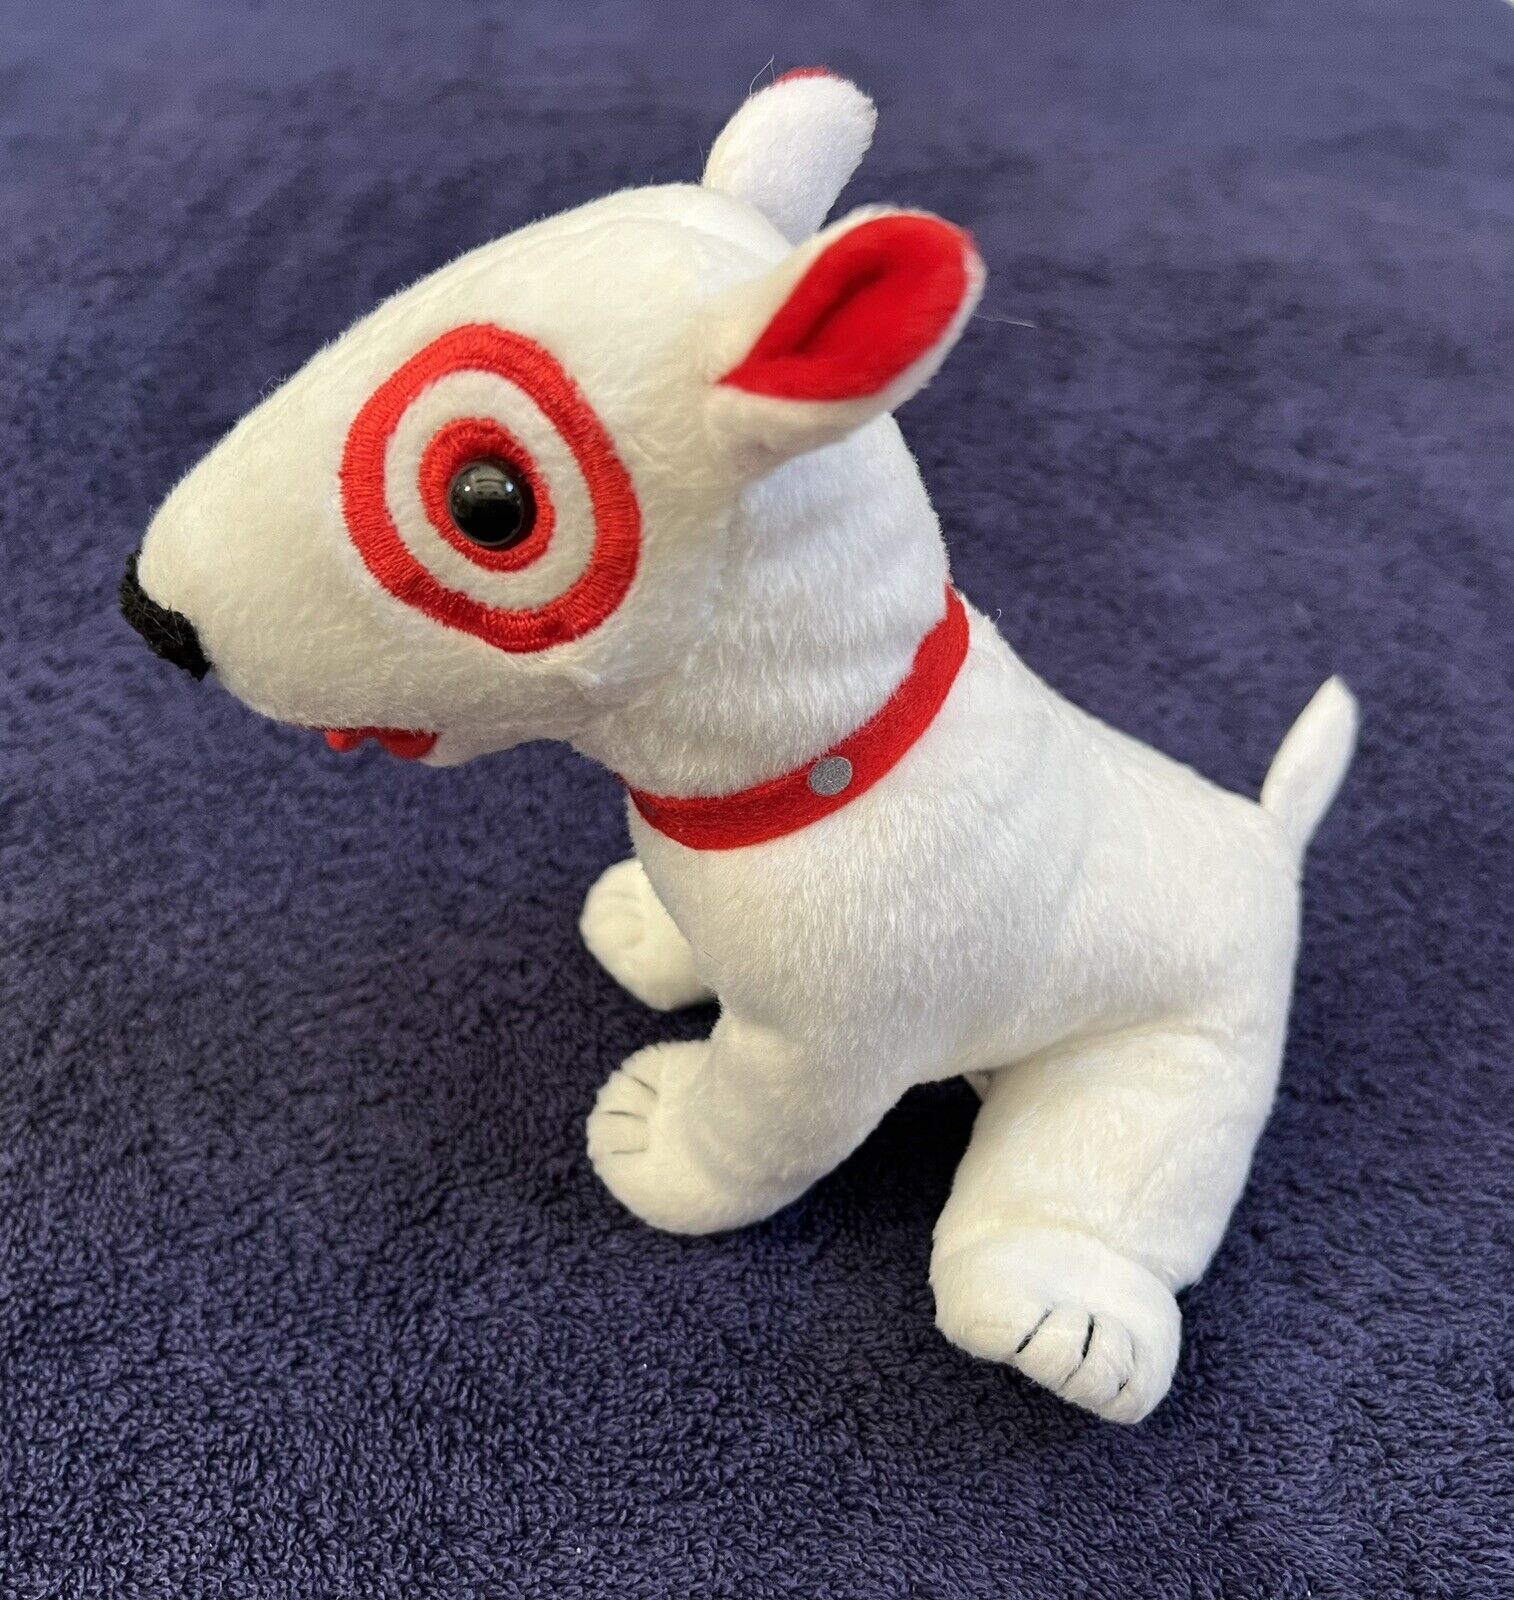 2007 Target Bullseye Small 7” White Dog Plush Stuffed Animal Collectible